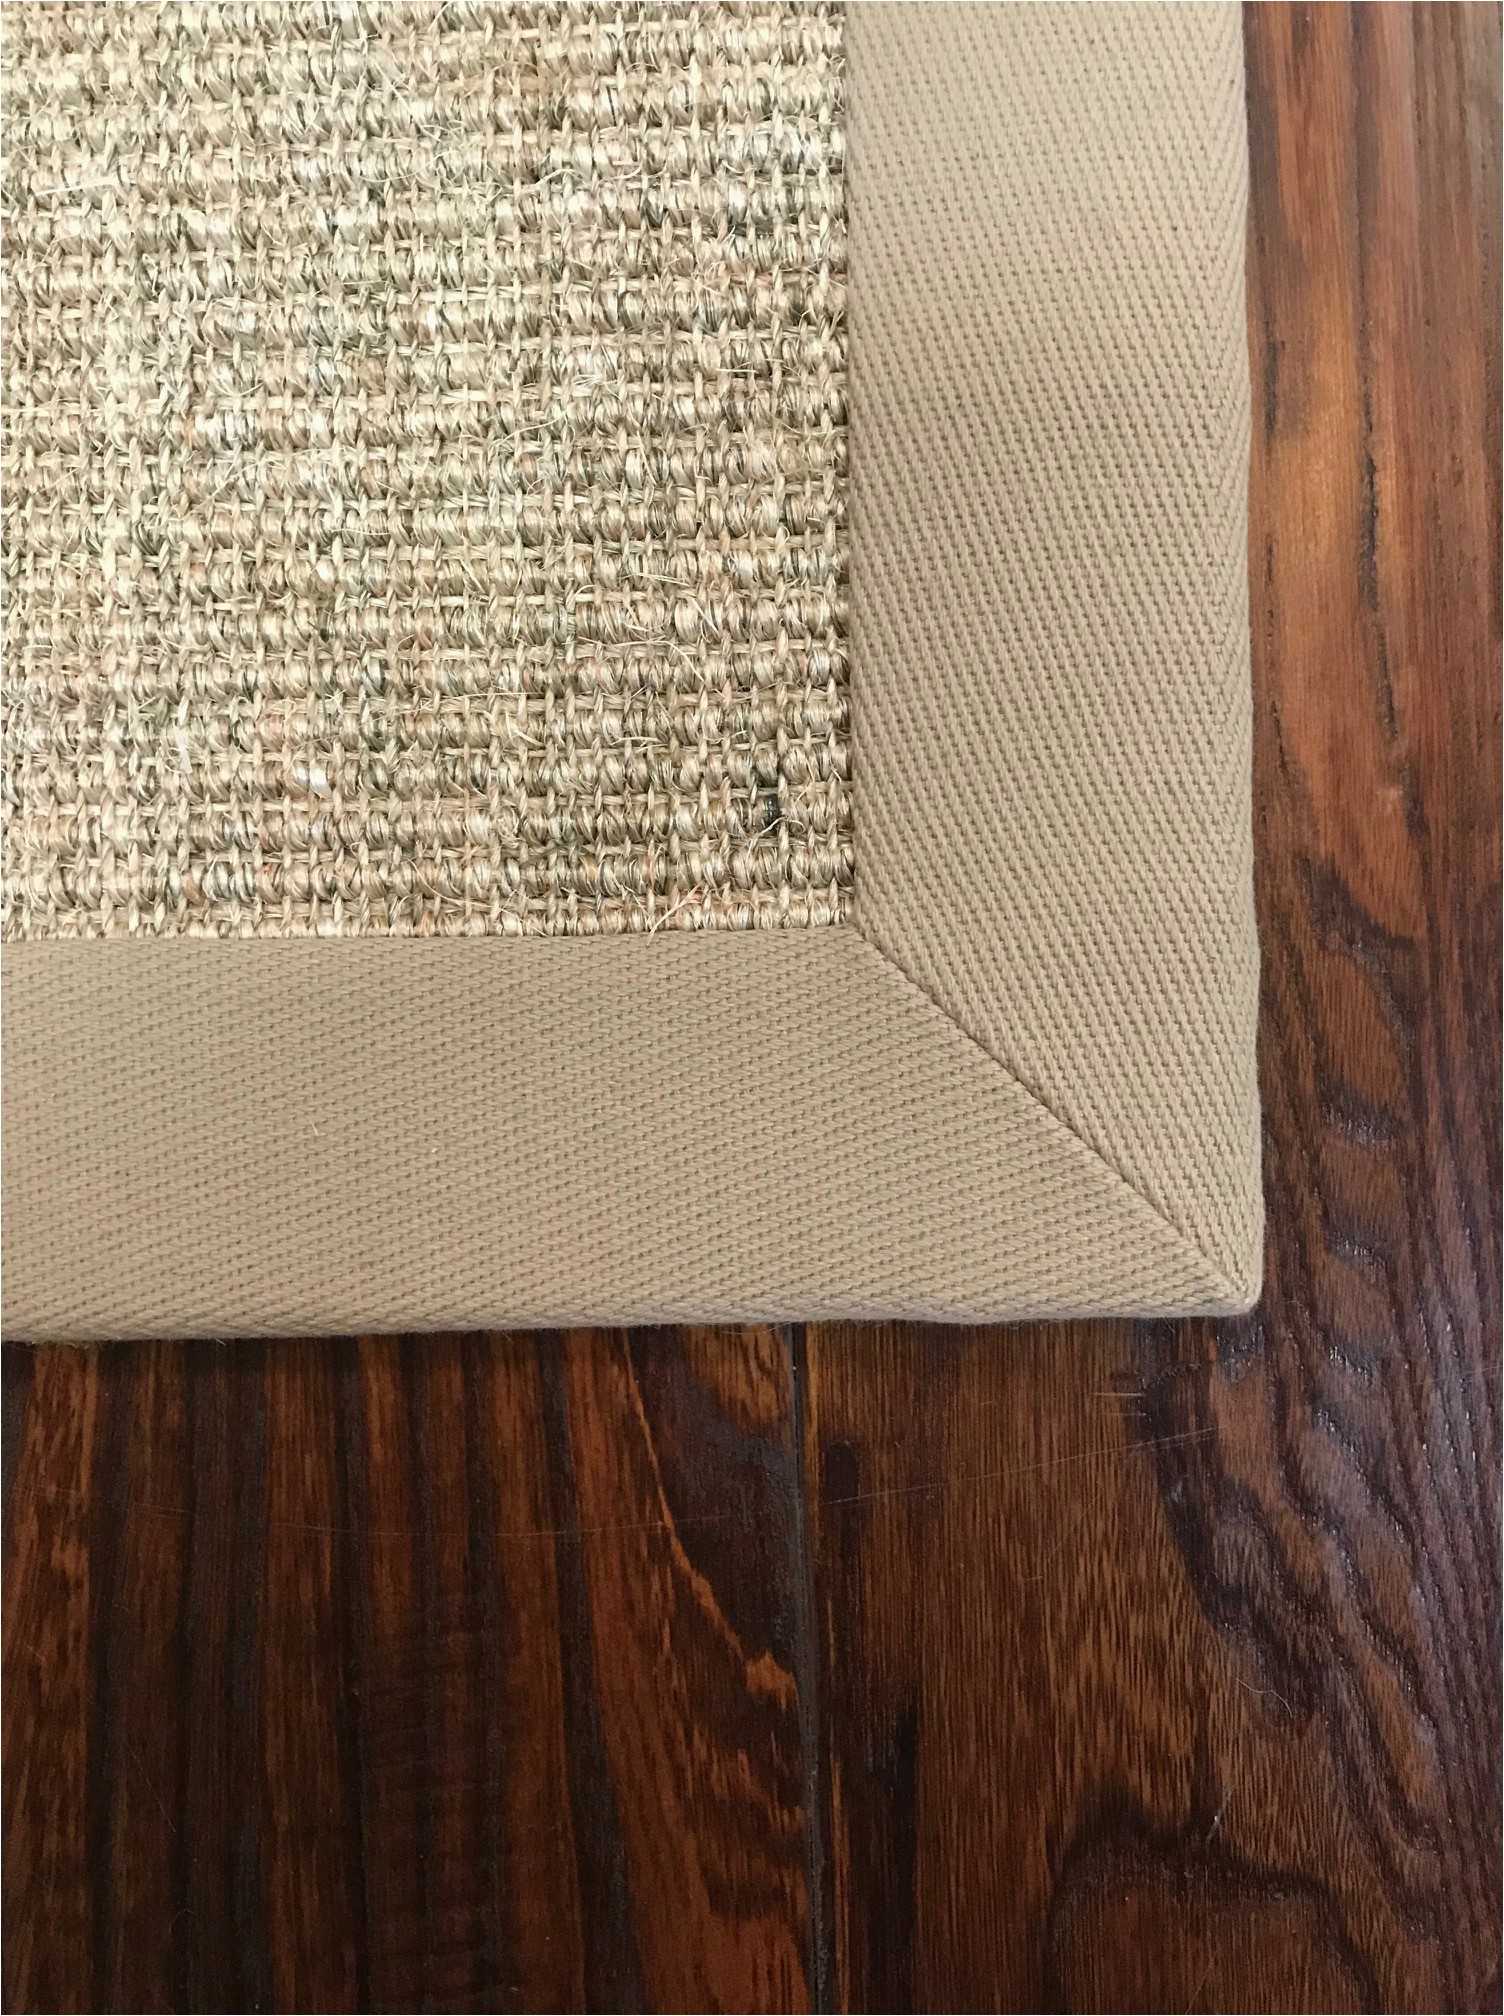 Make Carpet Into area Rug Three Ways to Bind A Rug